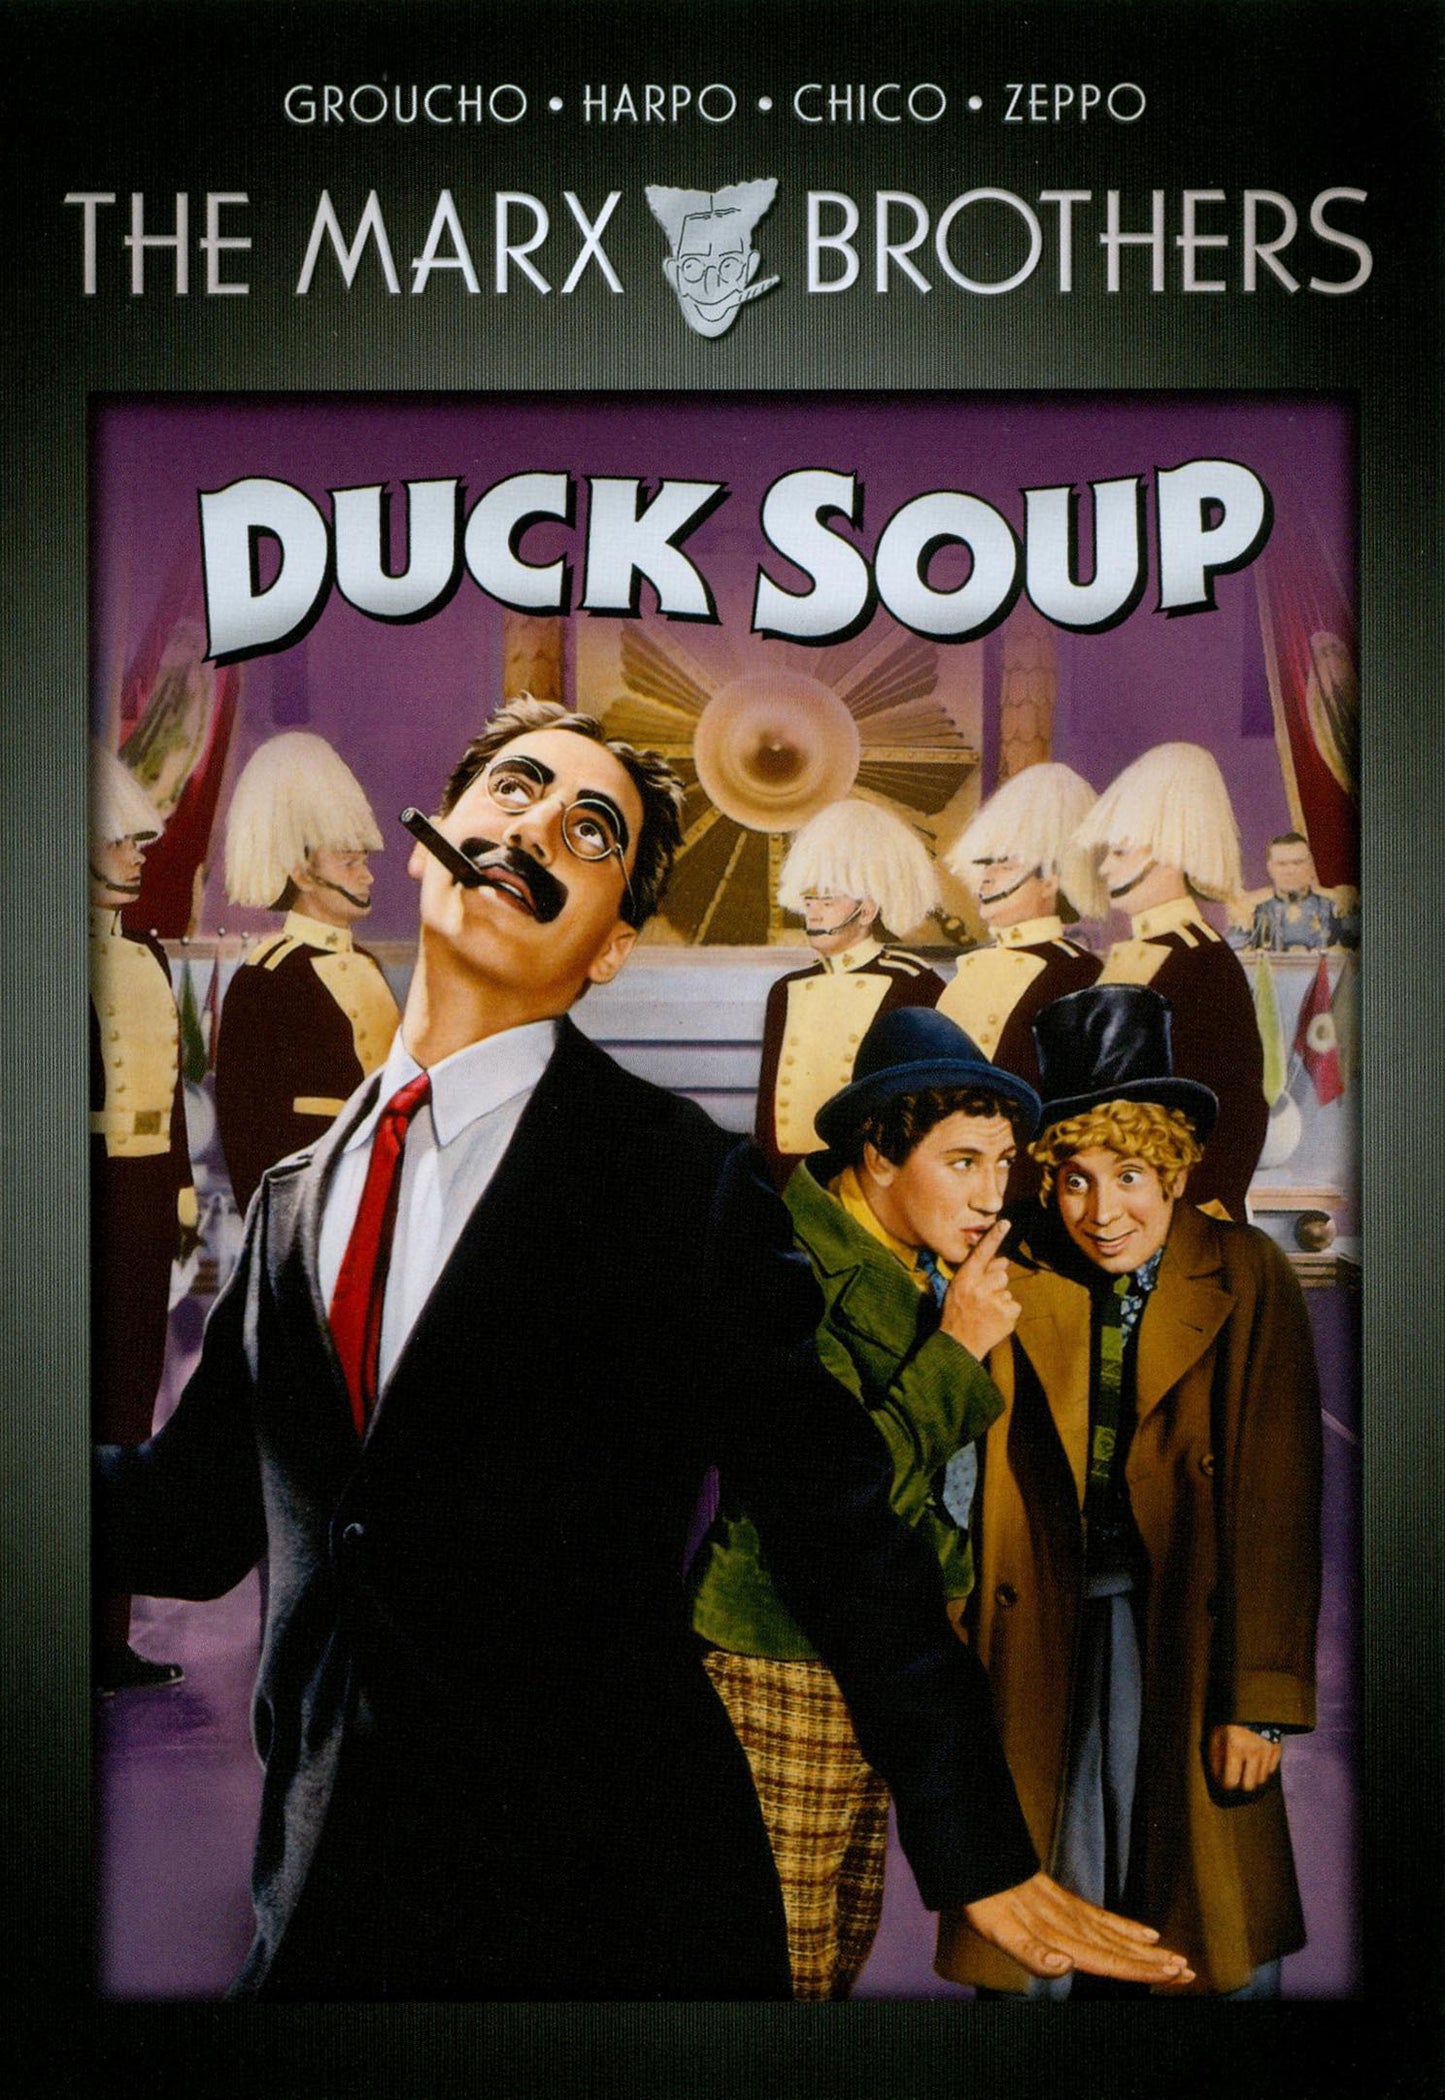 Duck Soup cover art